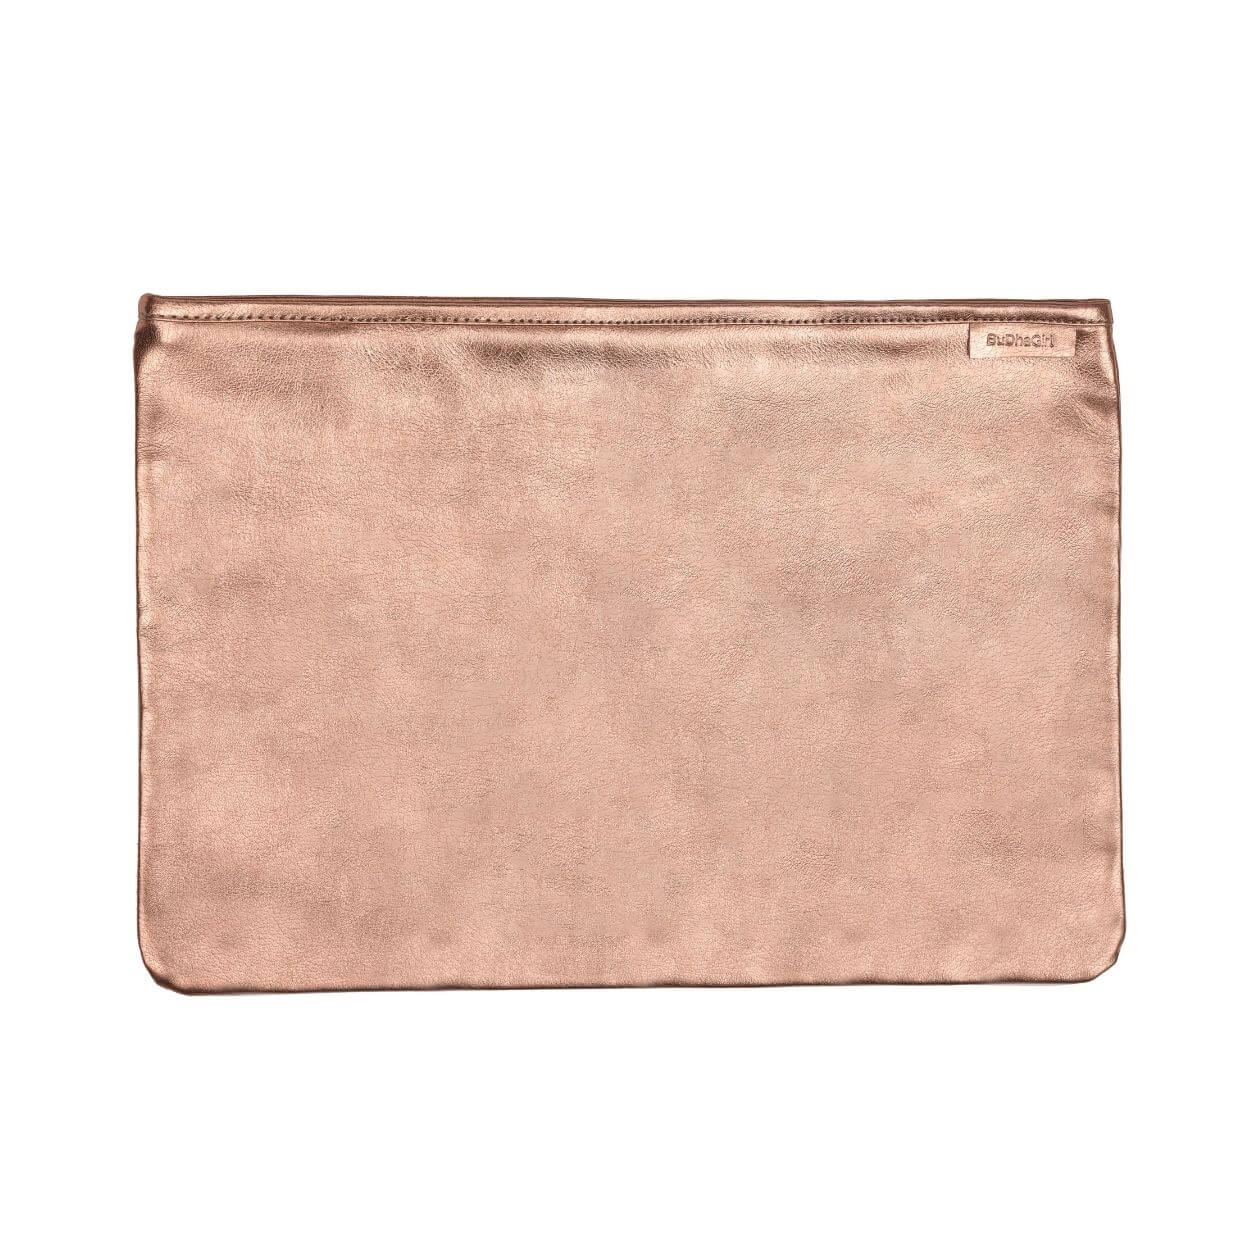 Rose Gold Leather Pochette Bag | Clutch Handbag by BuDhaGirl